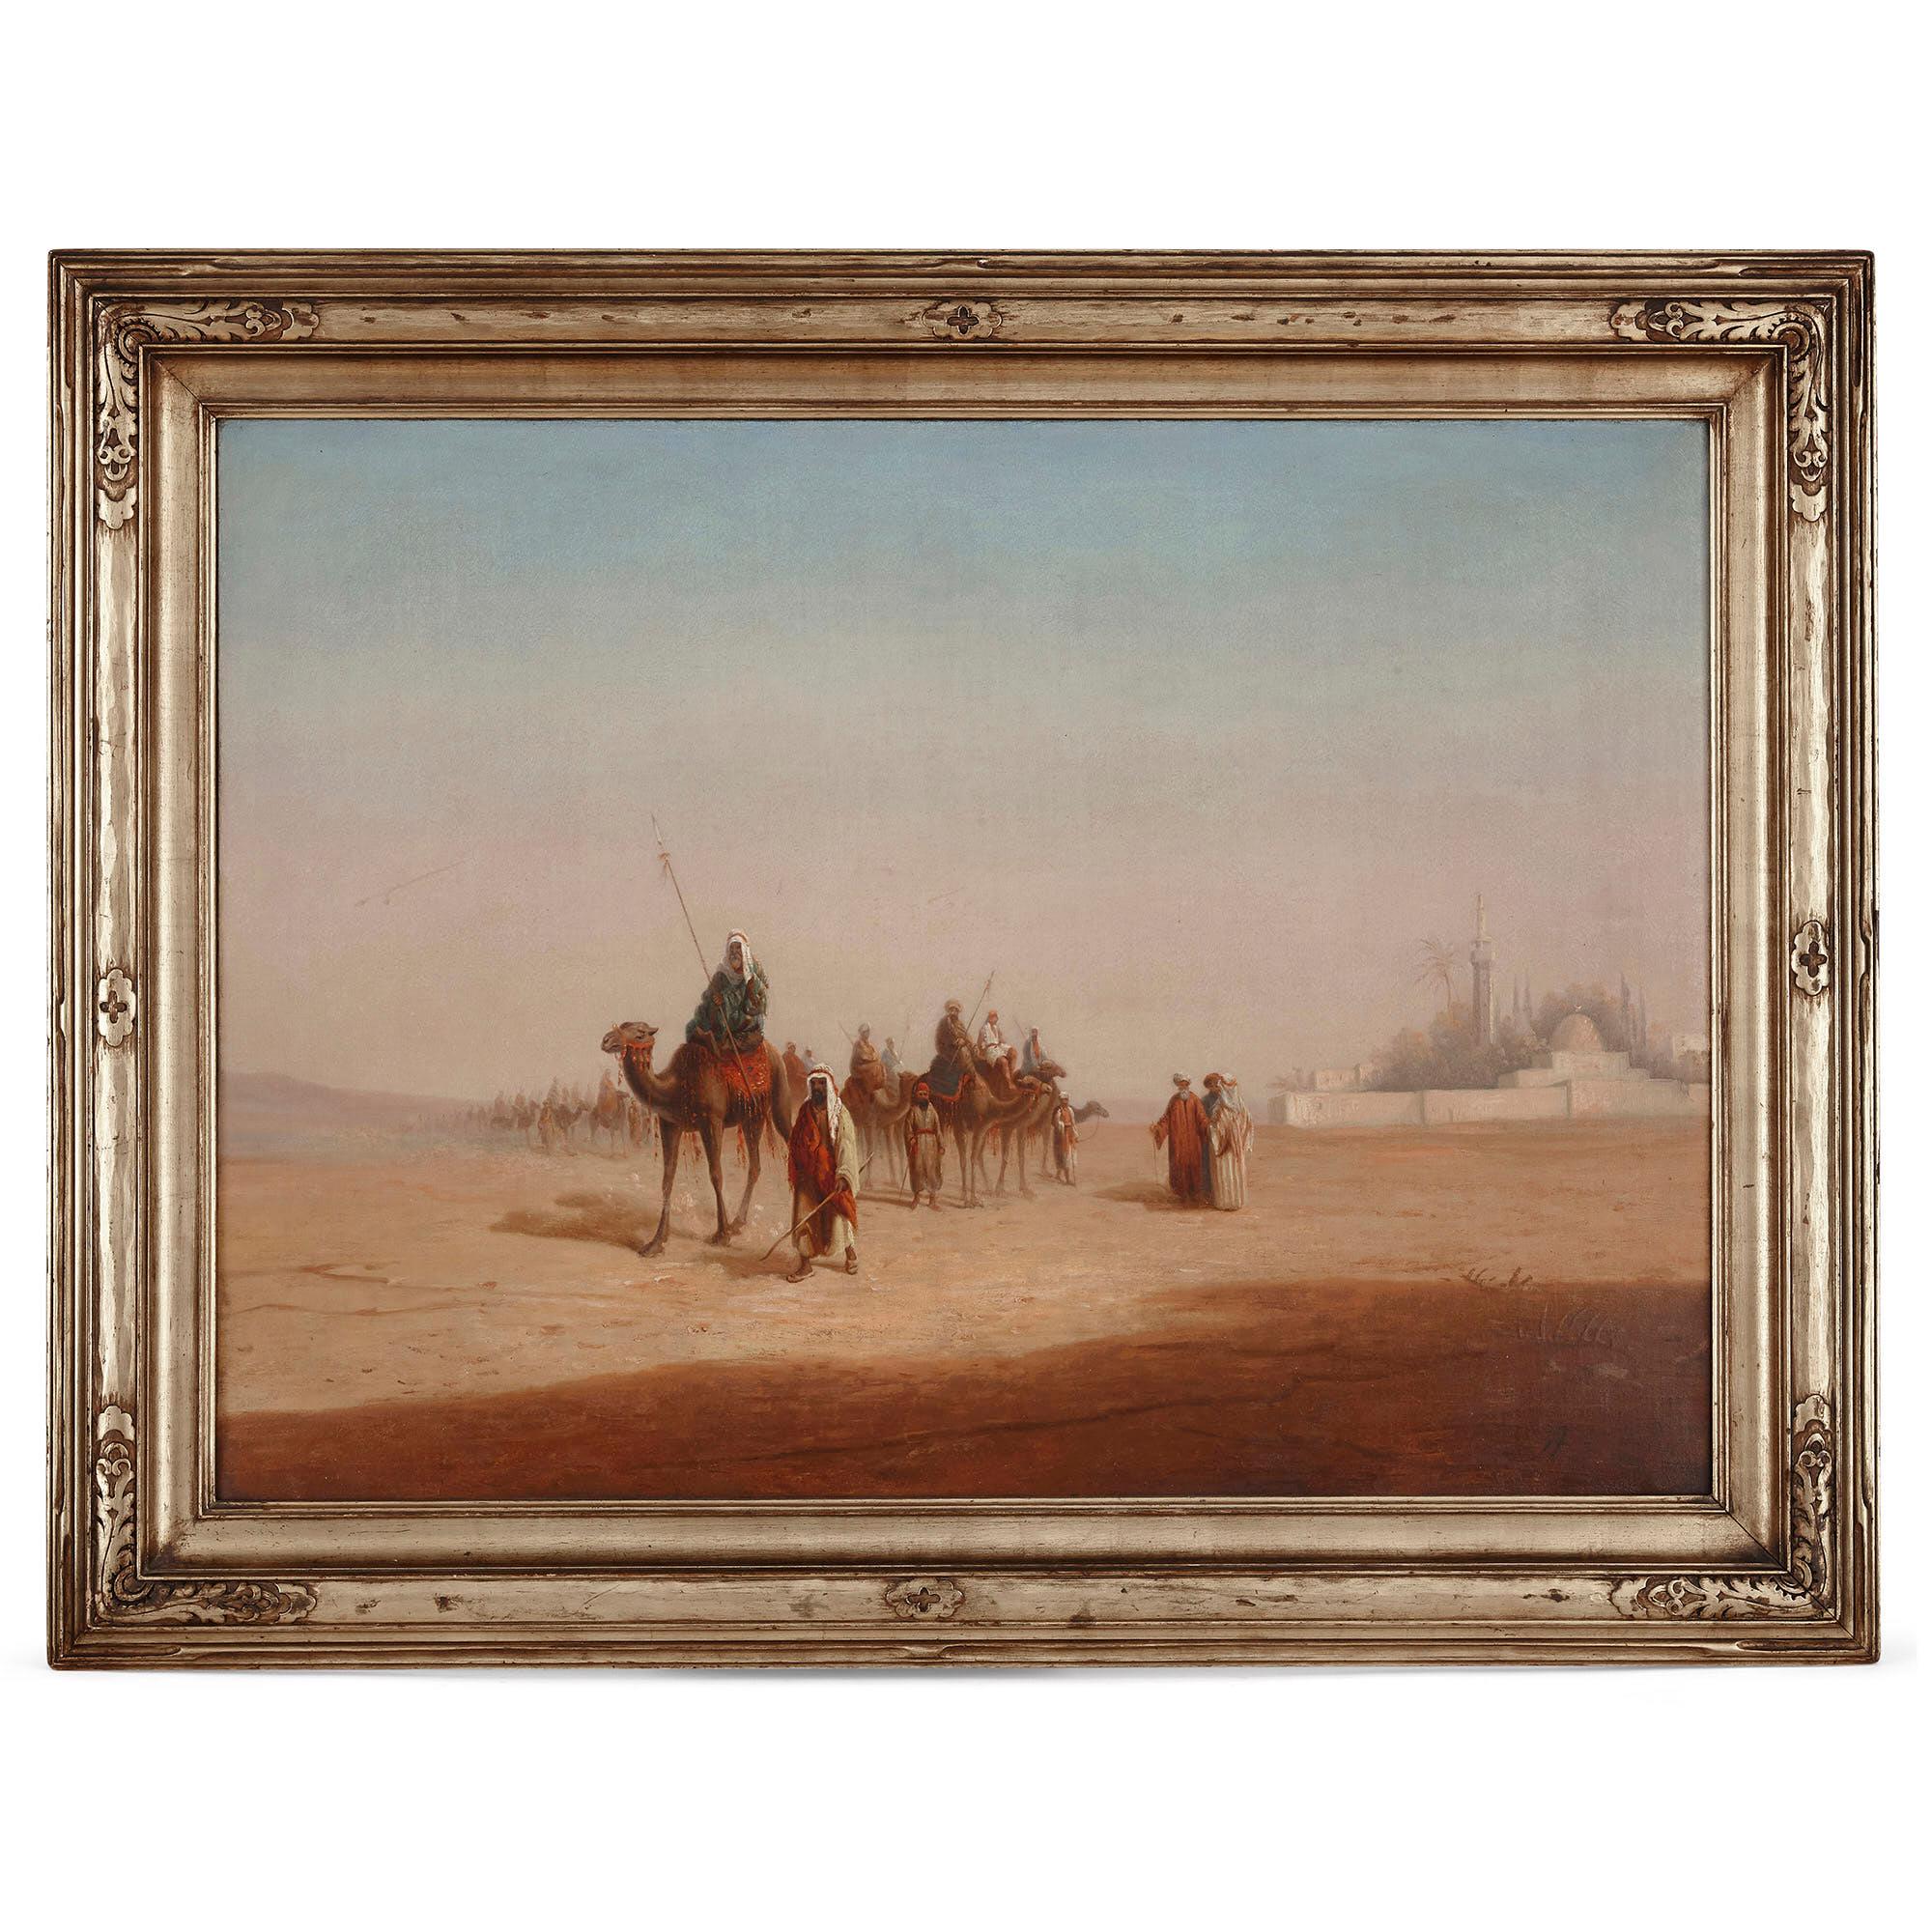 Unknown Landscape Painting - Orientalist oil painting of desert caravan